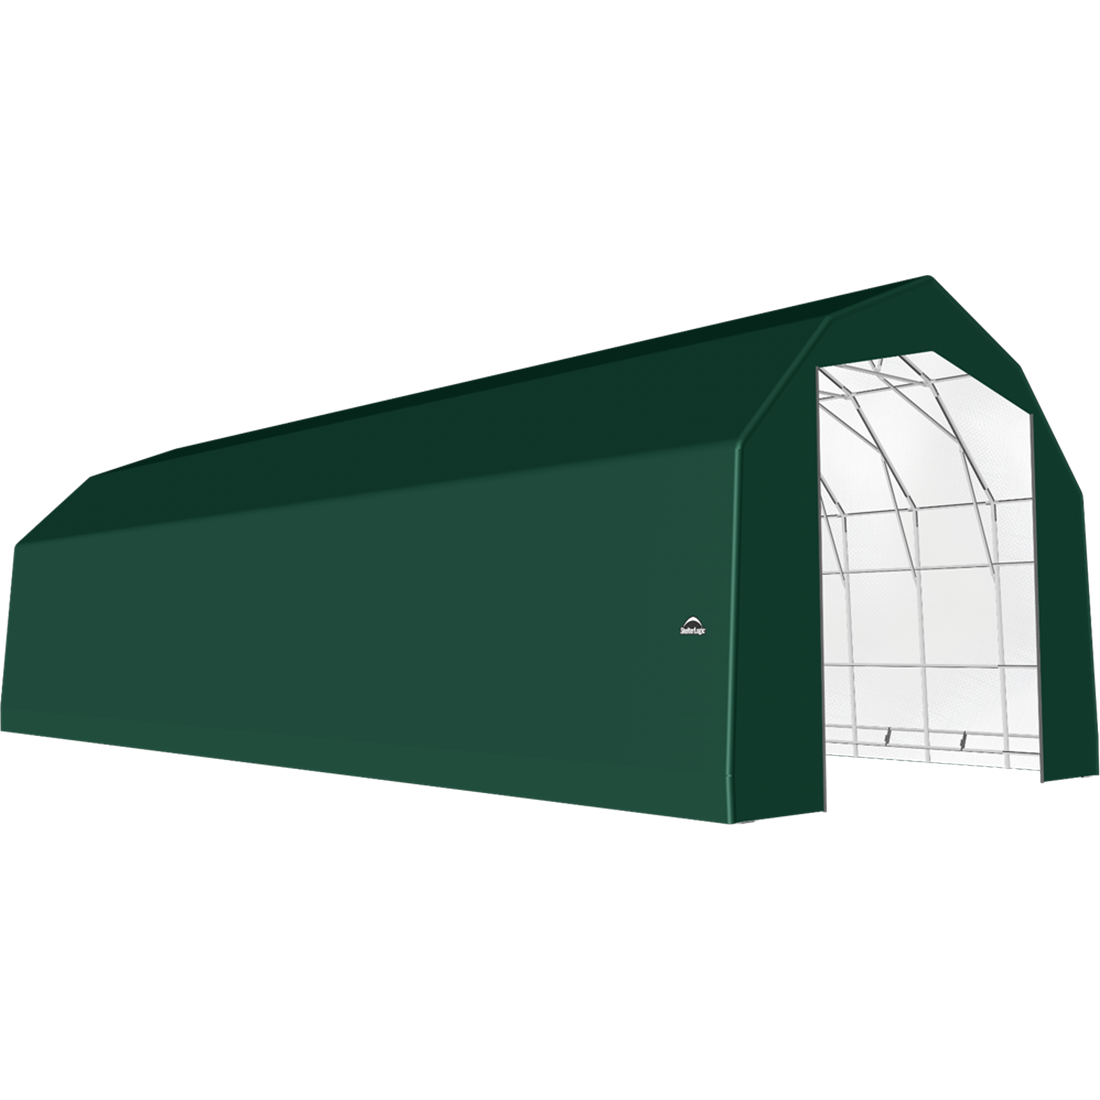 ShelterTech SP Series Barn Shelter, 25 ft. x 56 ft. x 20 ft. Heavy Duty PVC 14.5 oz. Green